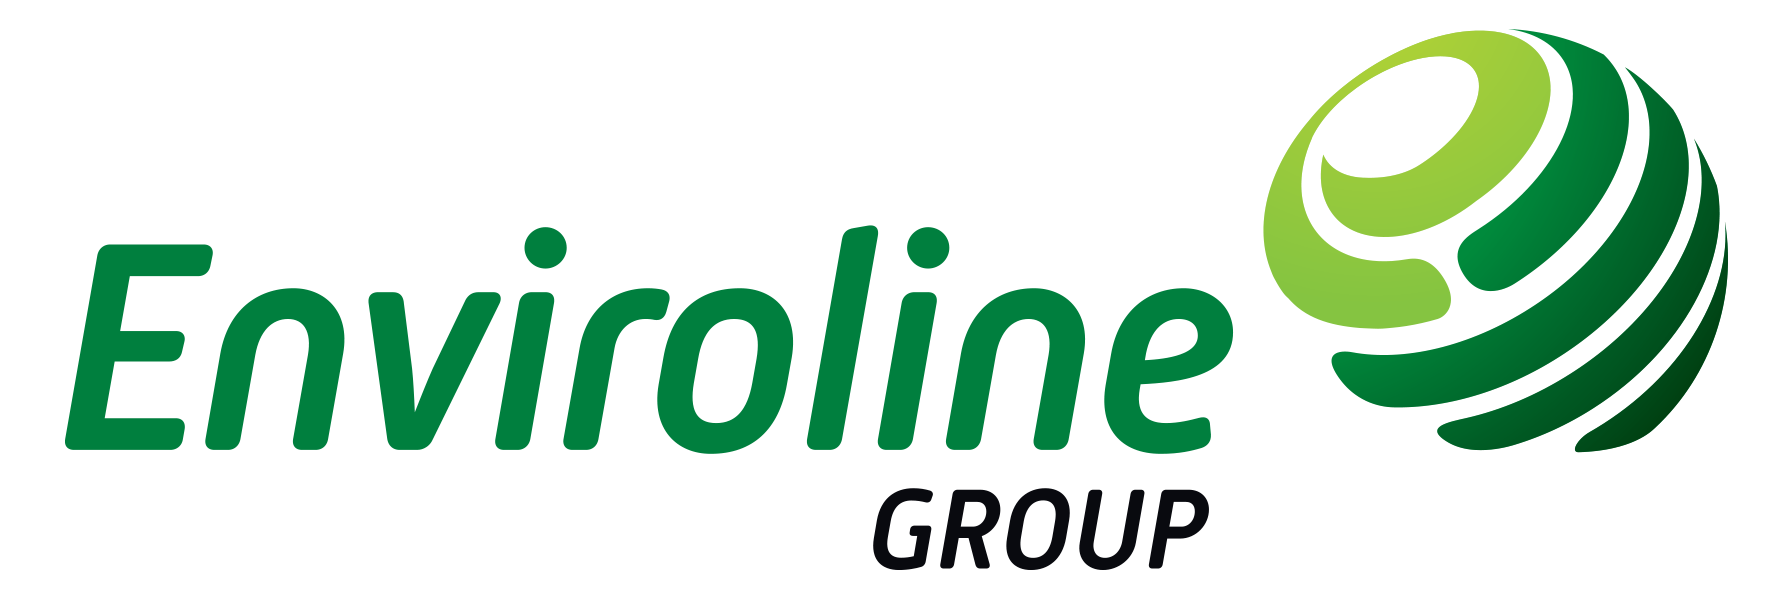 Enviroline Group